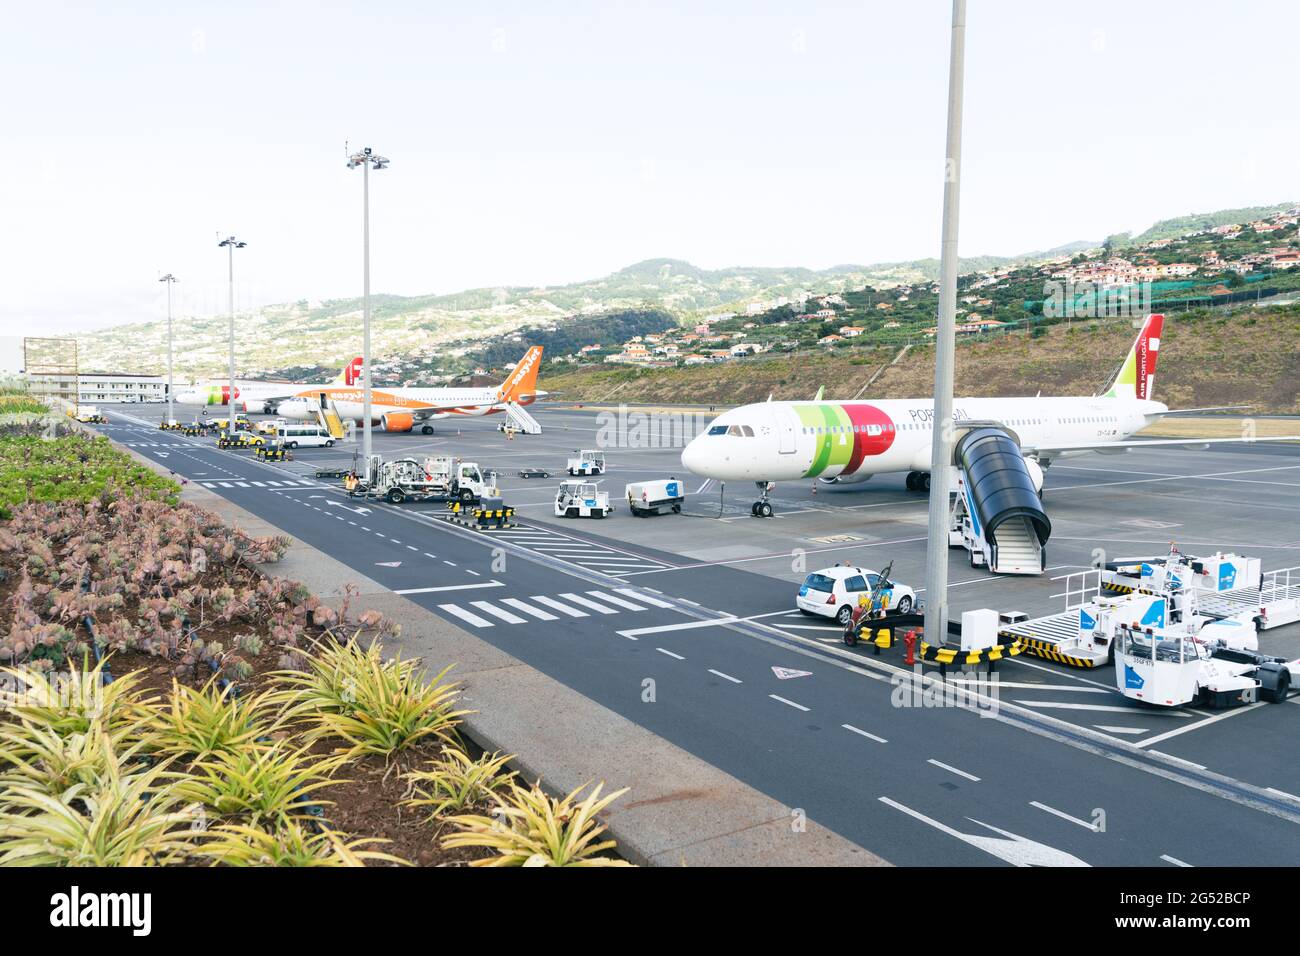 Passenger aircrafts at Cristiano Ronaldo international airport, Funchal, Madeira island, Portugal Stock Photo